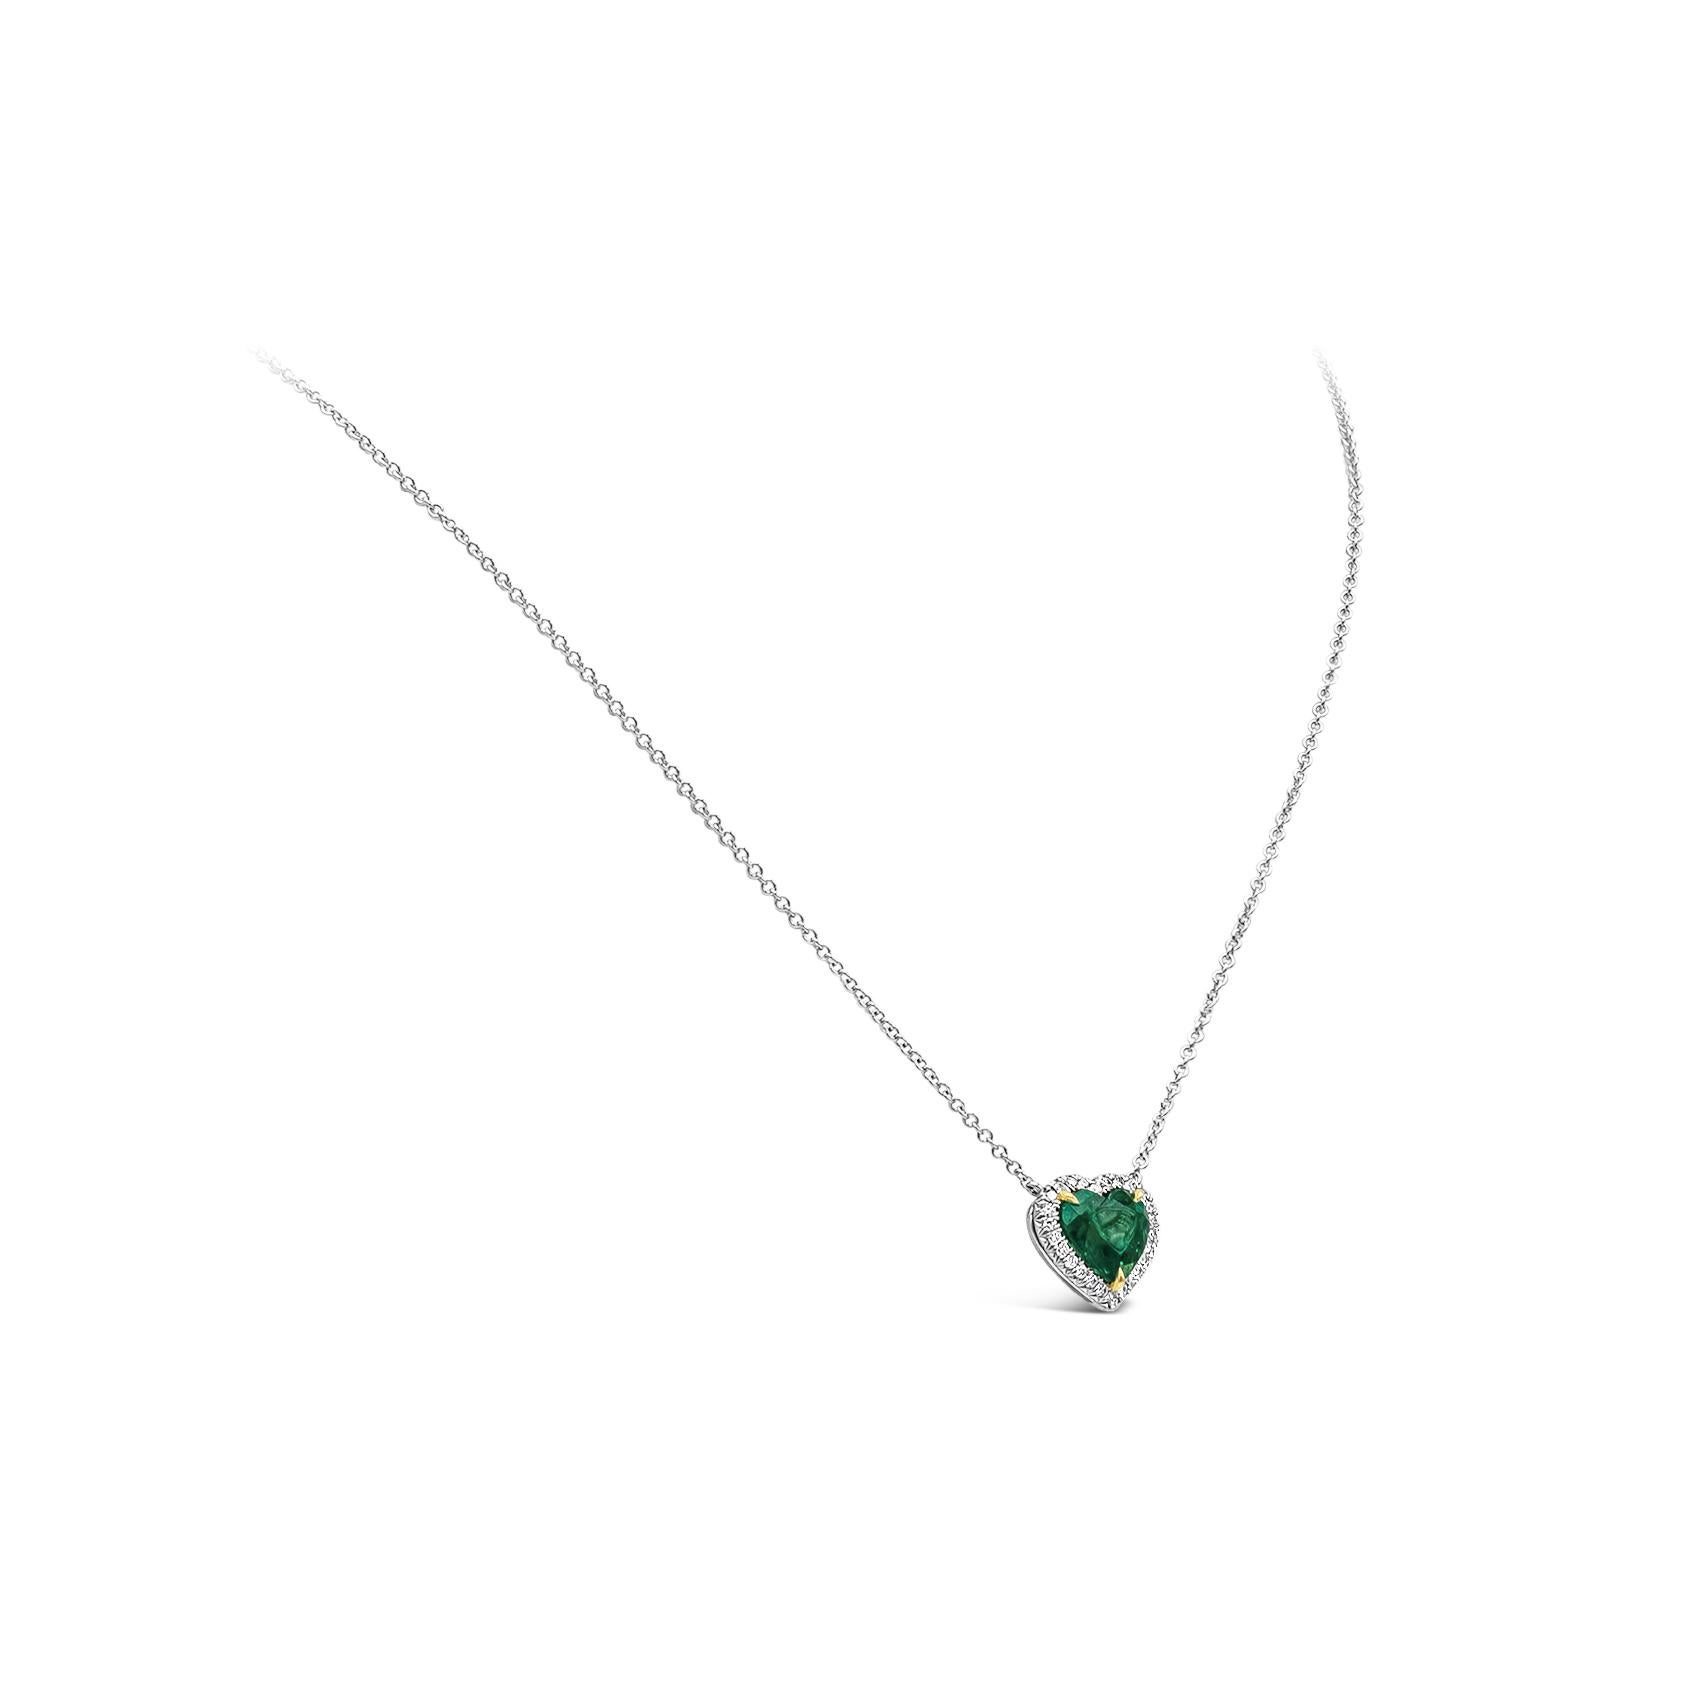 Contemporary C. Dunaigre Certified Colombian Emerald and Diamond Halo Pendant Necklace